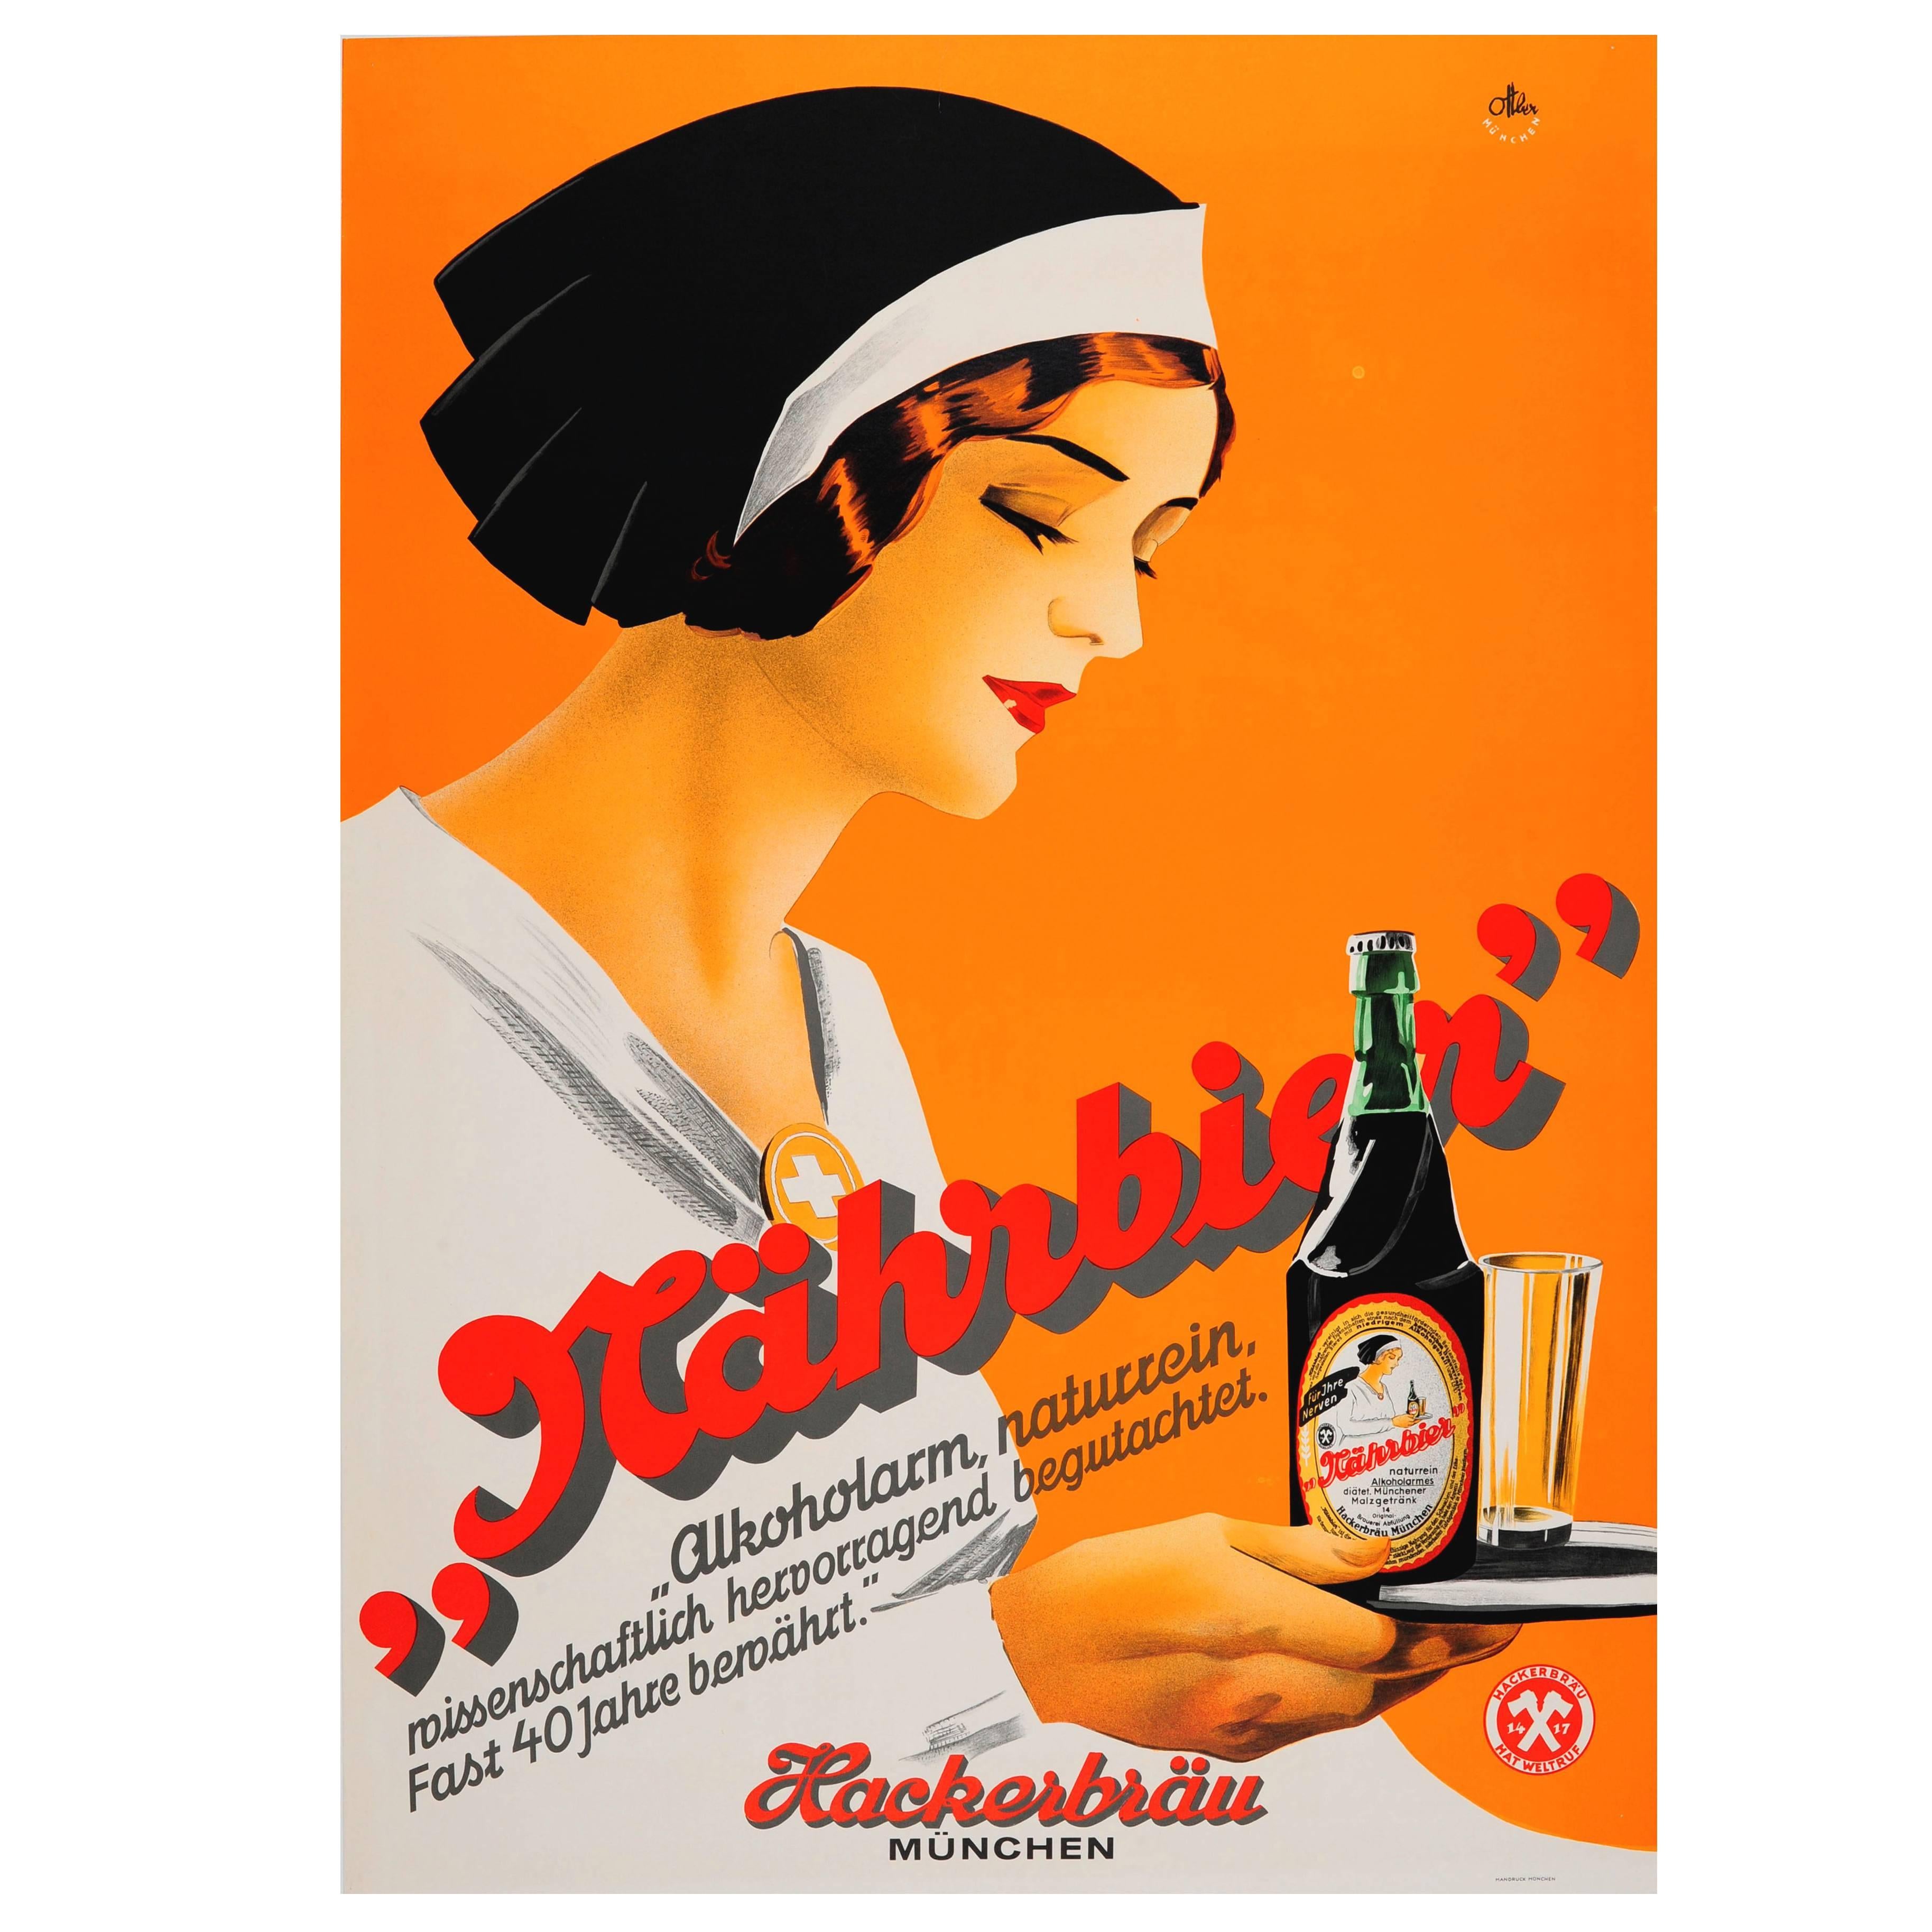 Original Vintage 1930s Art Deco Beer Poster For The Hackerbrau Brewery In Munich